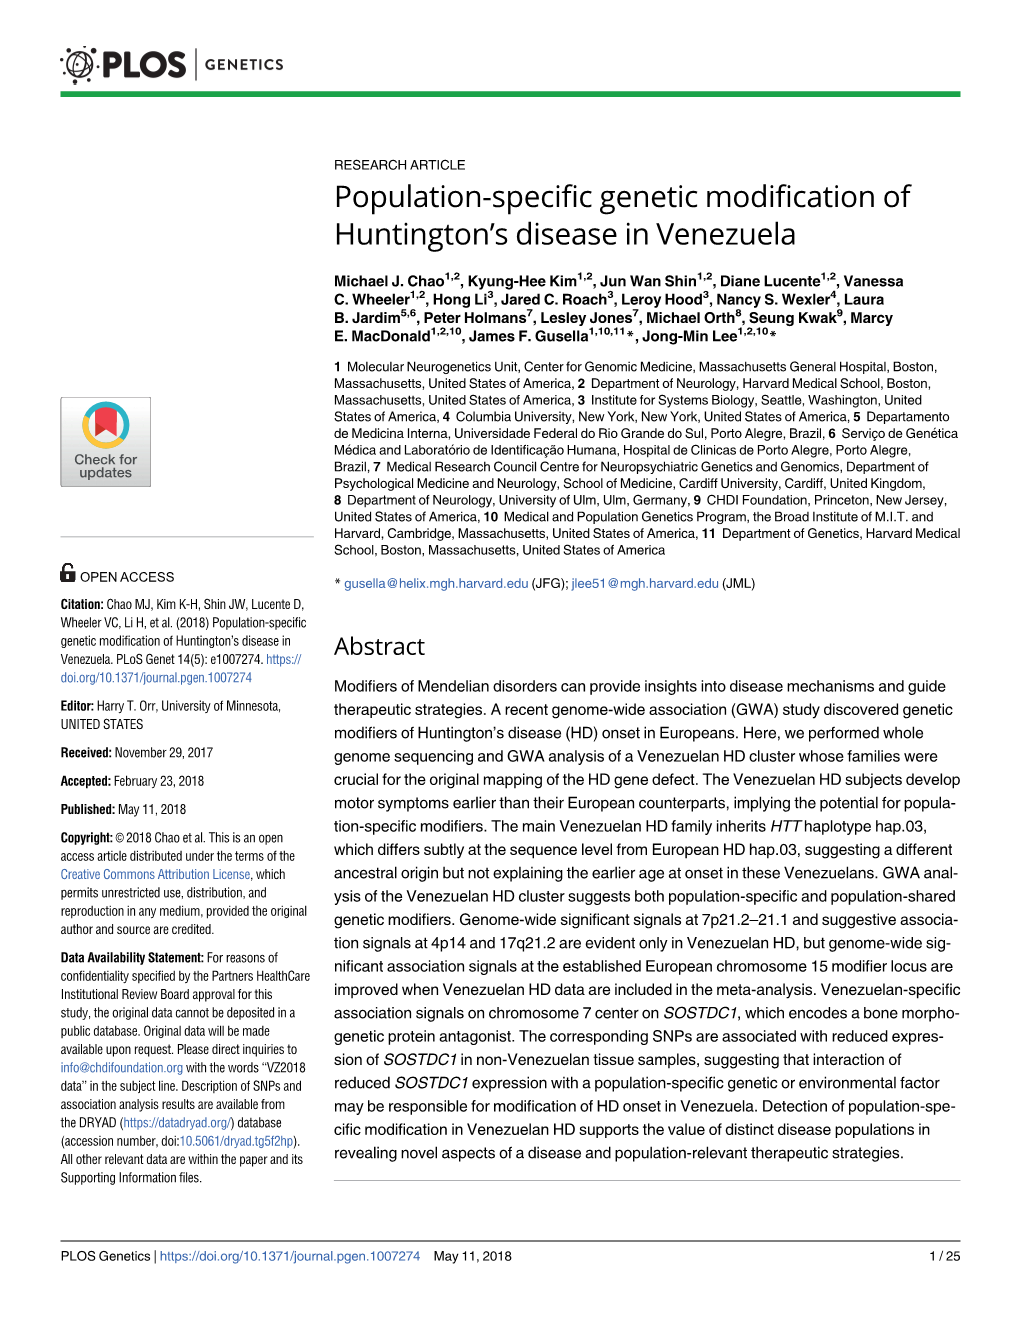 Population-Specific Genetic Modification of Huntington’S Disease in Venezuela